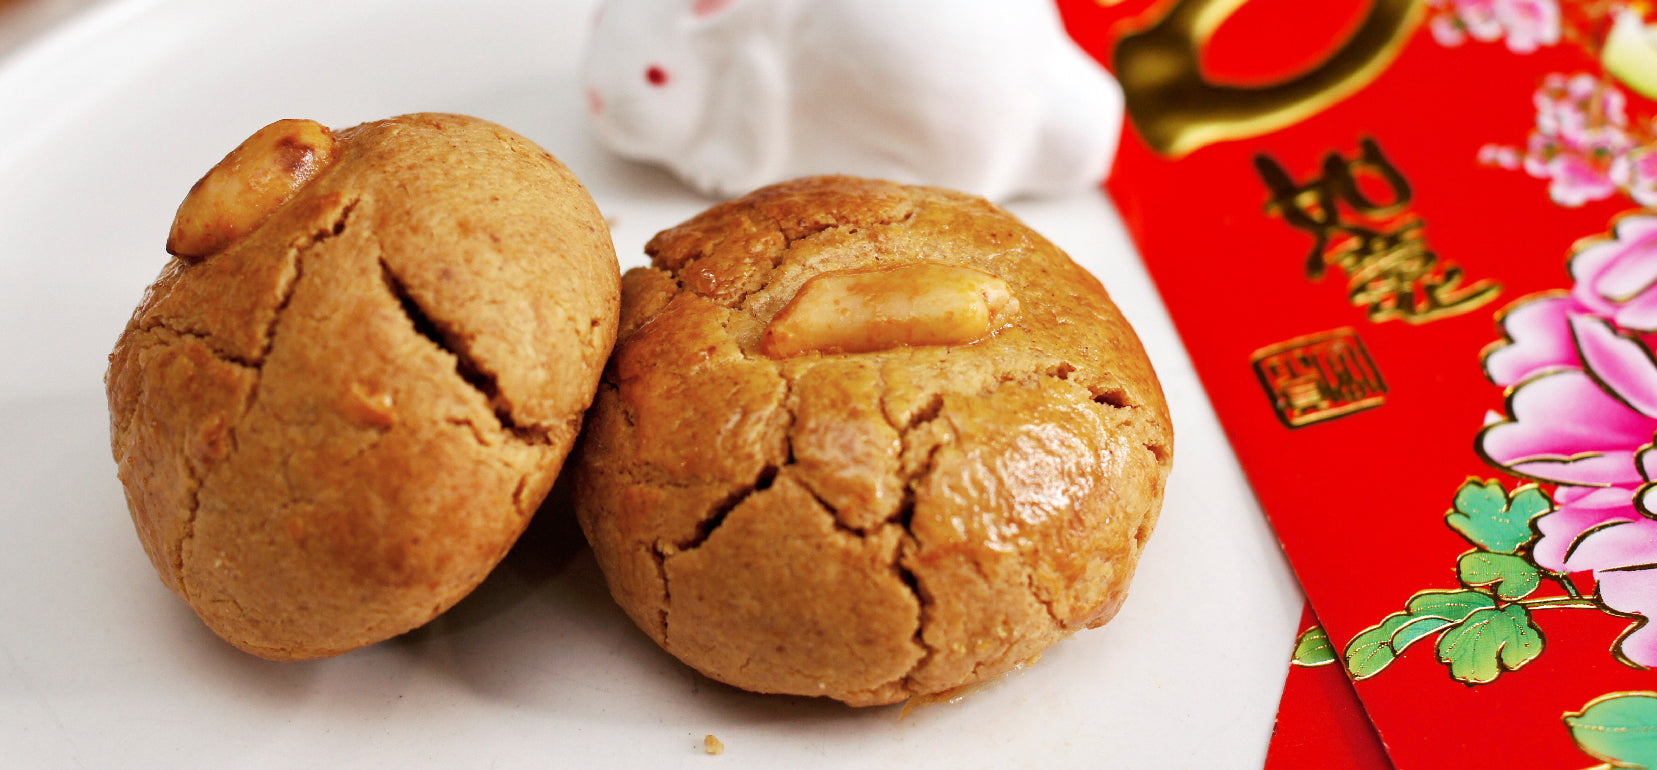 Lunar New Year Peanut Cookies - 花生饼 or Hua Sheng Bing